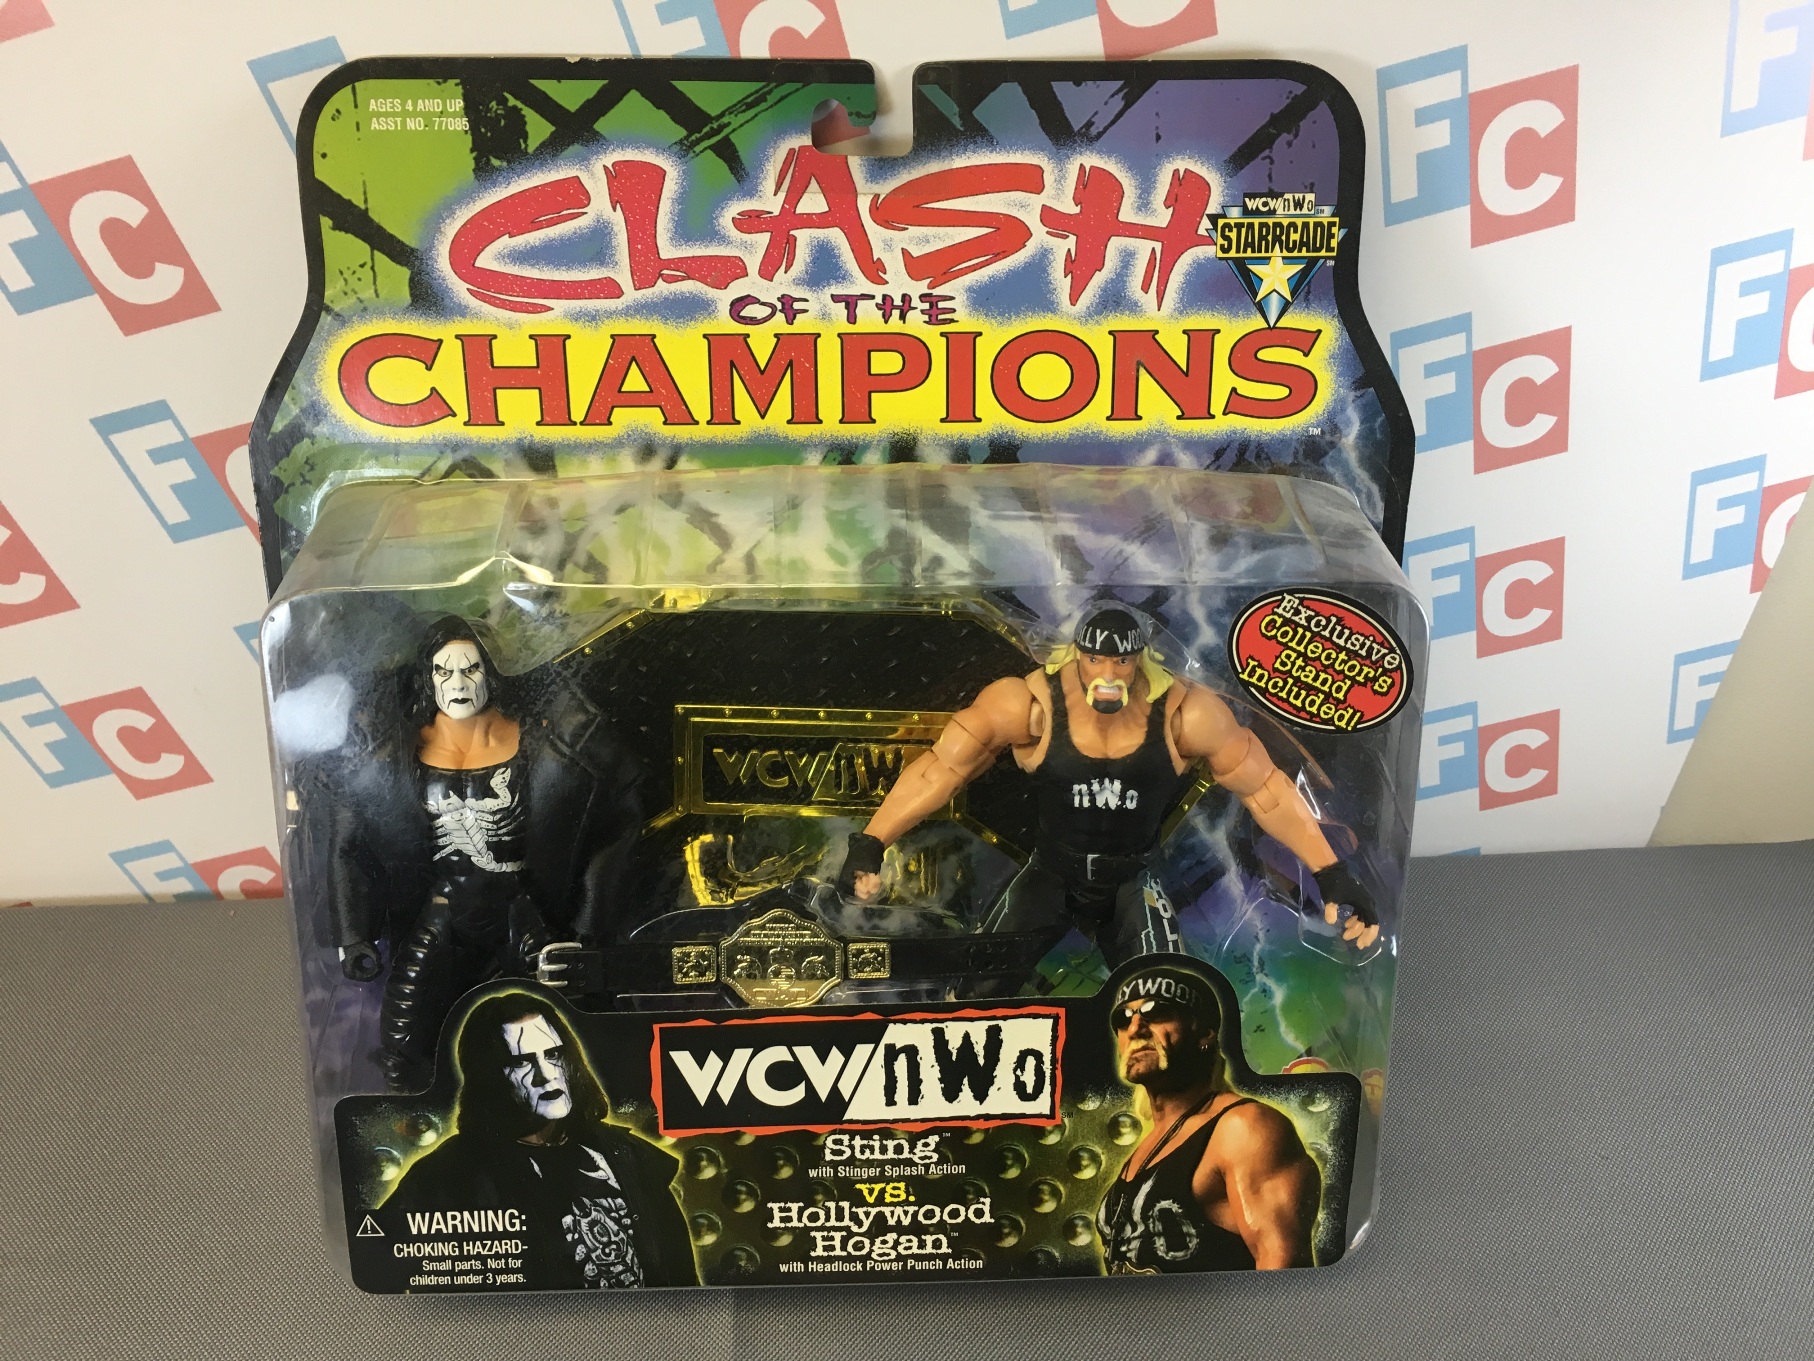 Clash of the Champions: Sting vs. Hollywood Hogan